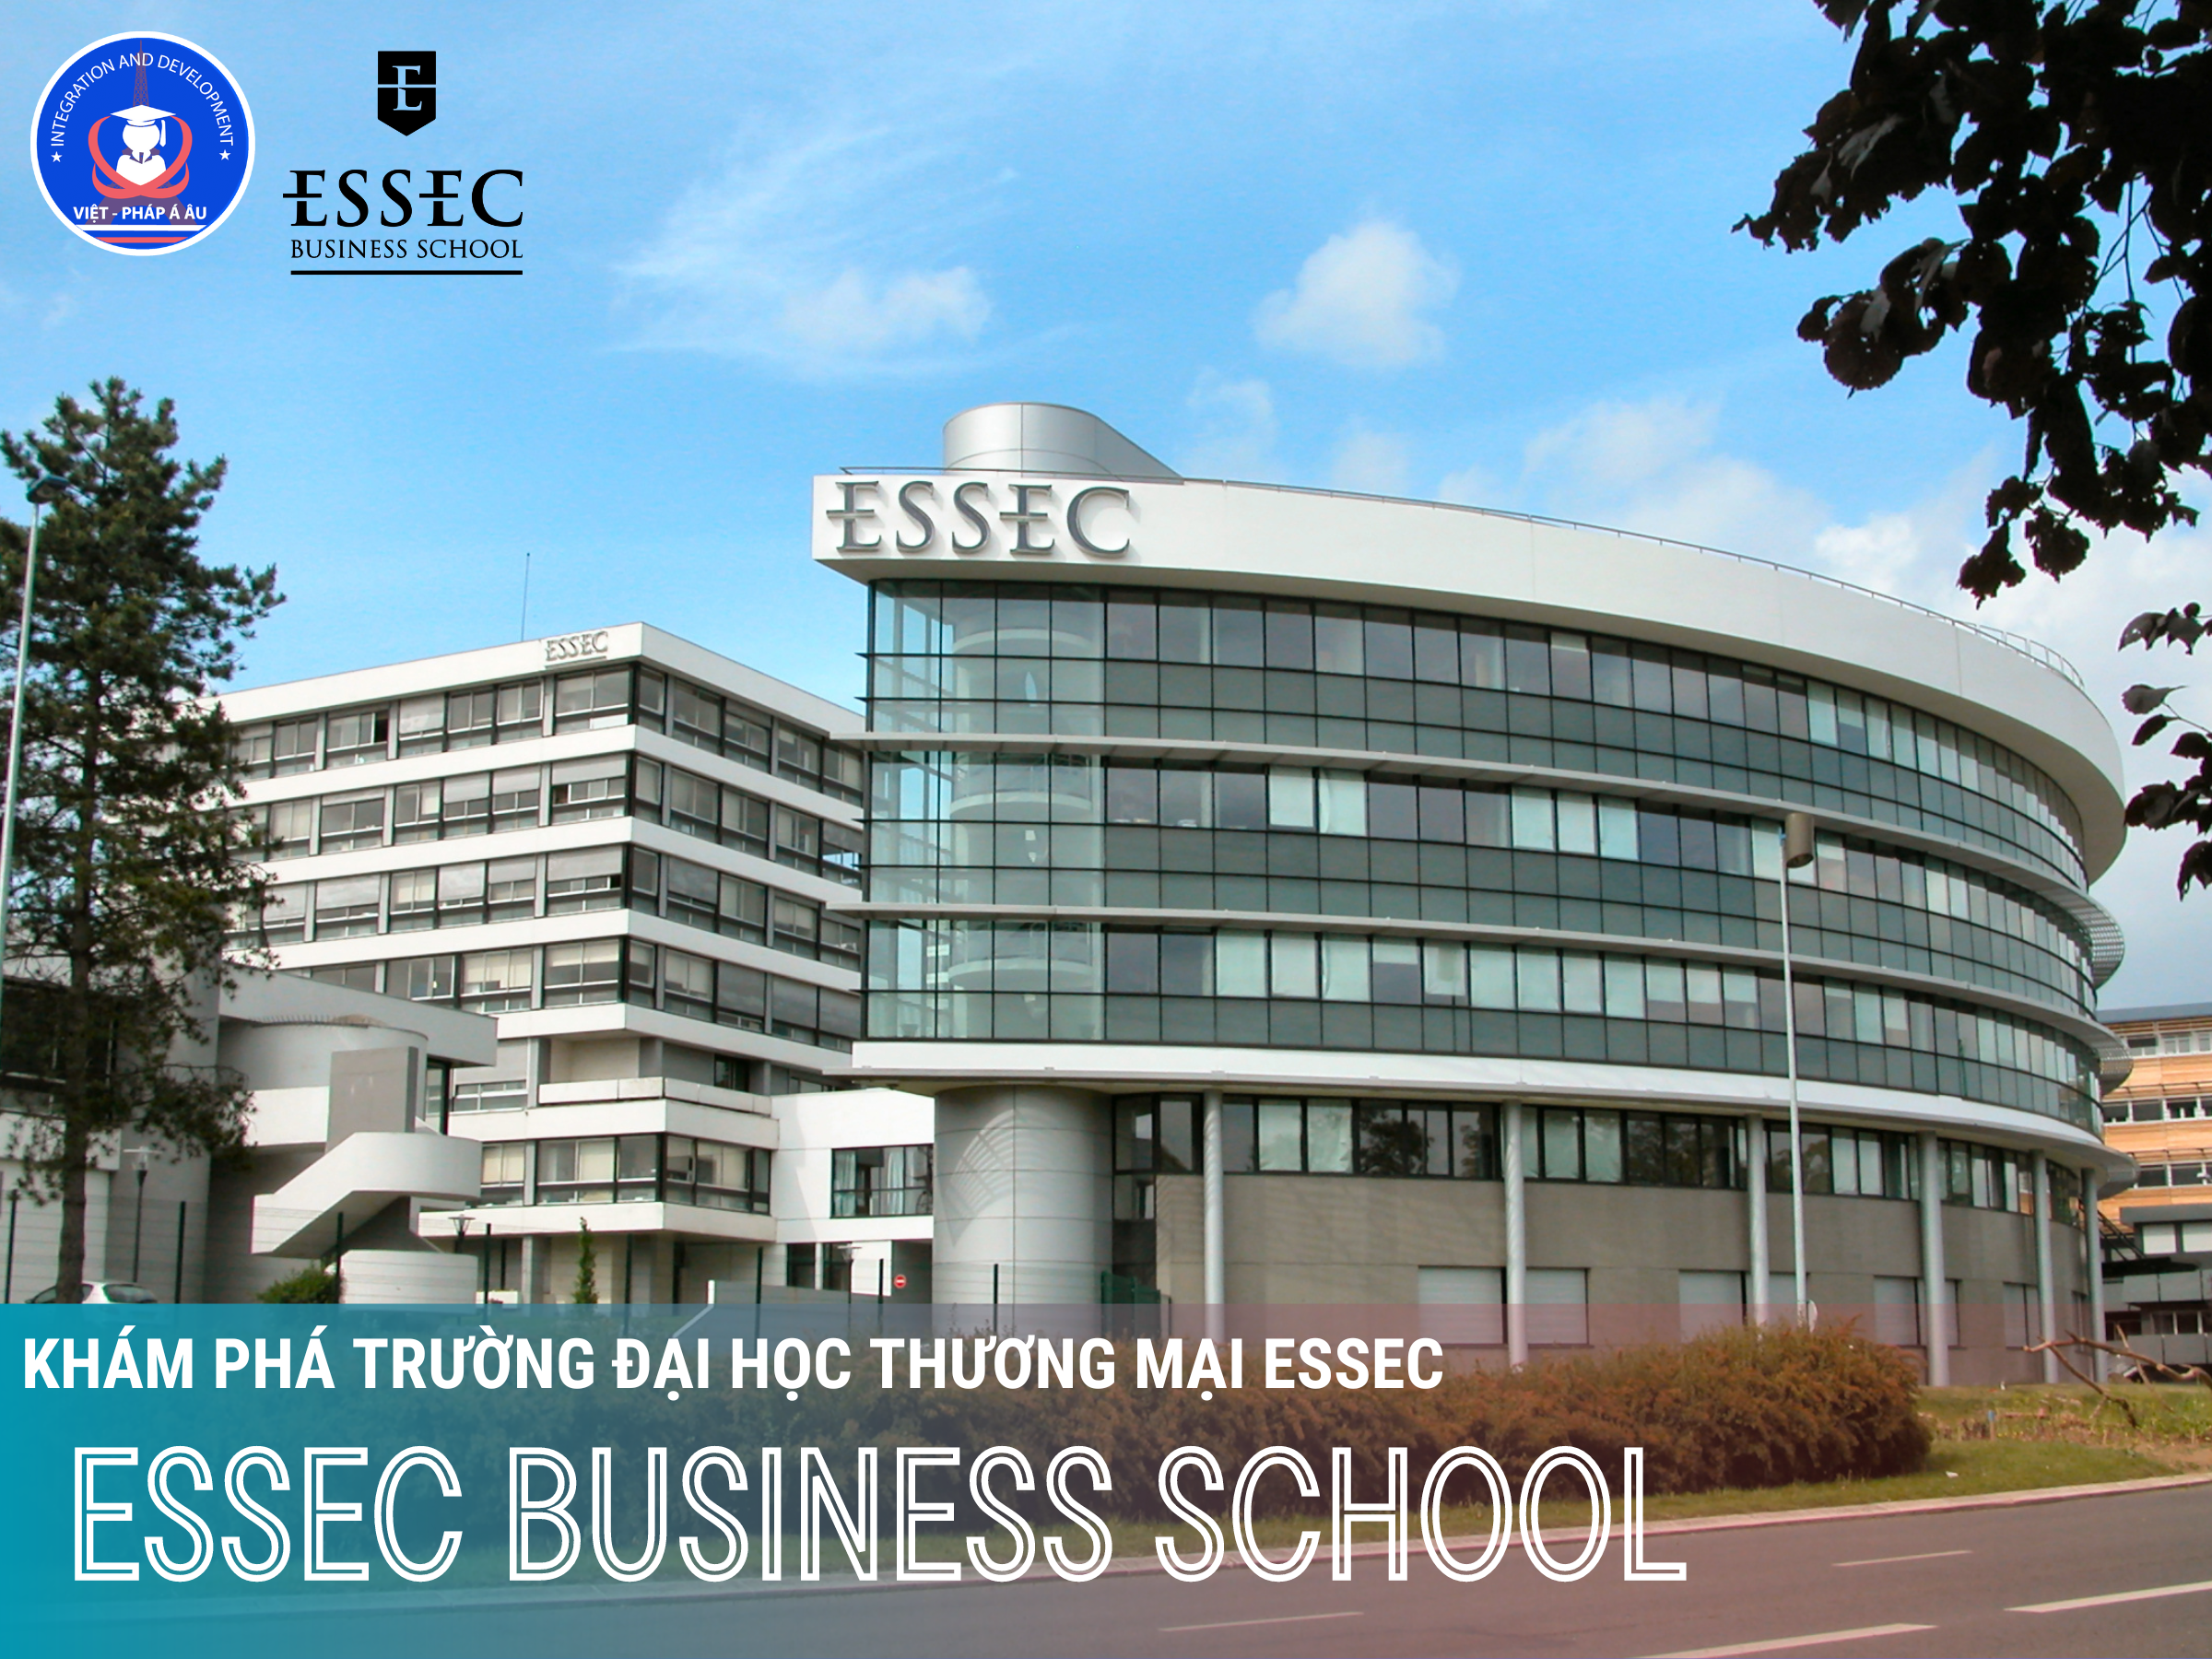 _ESSEC BUSINESS SCHOOL